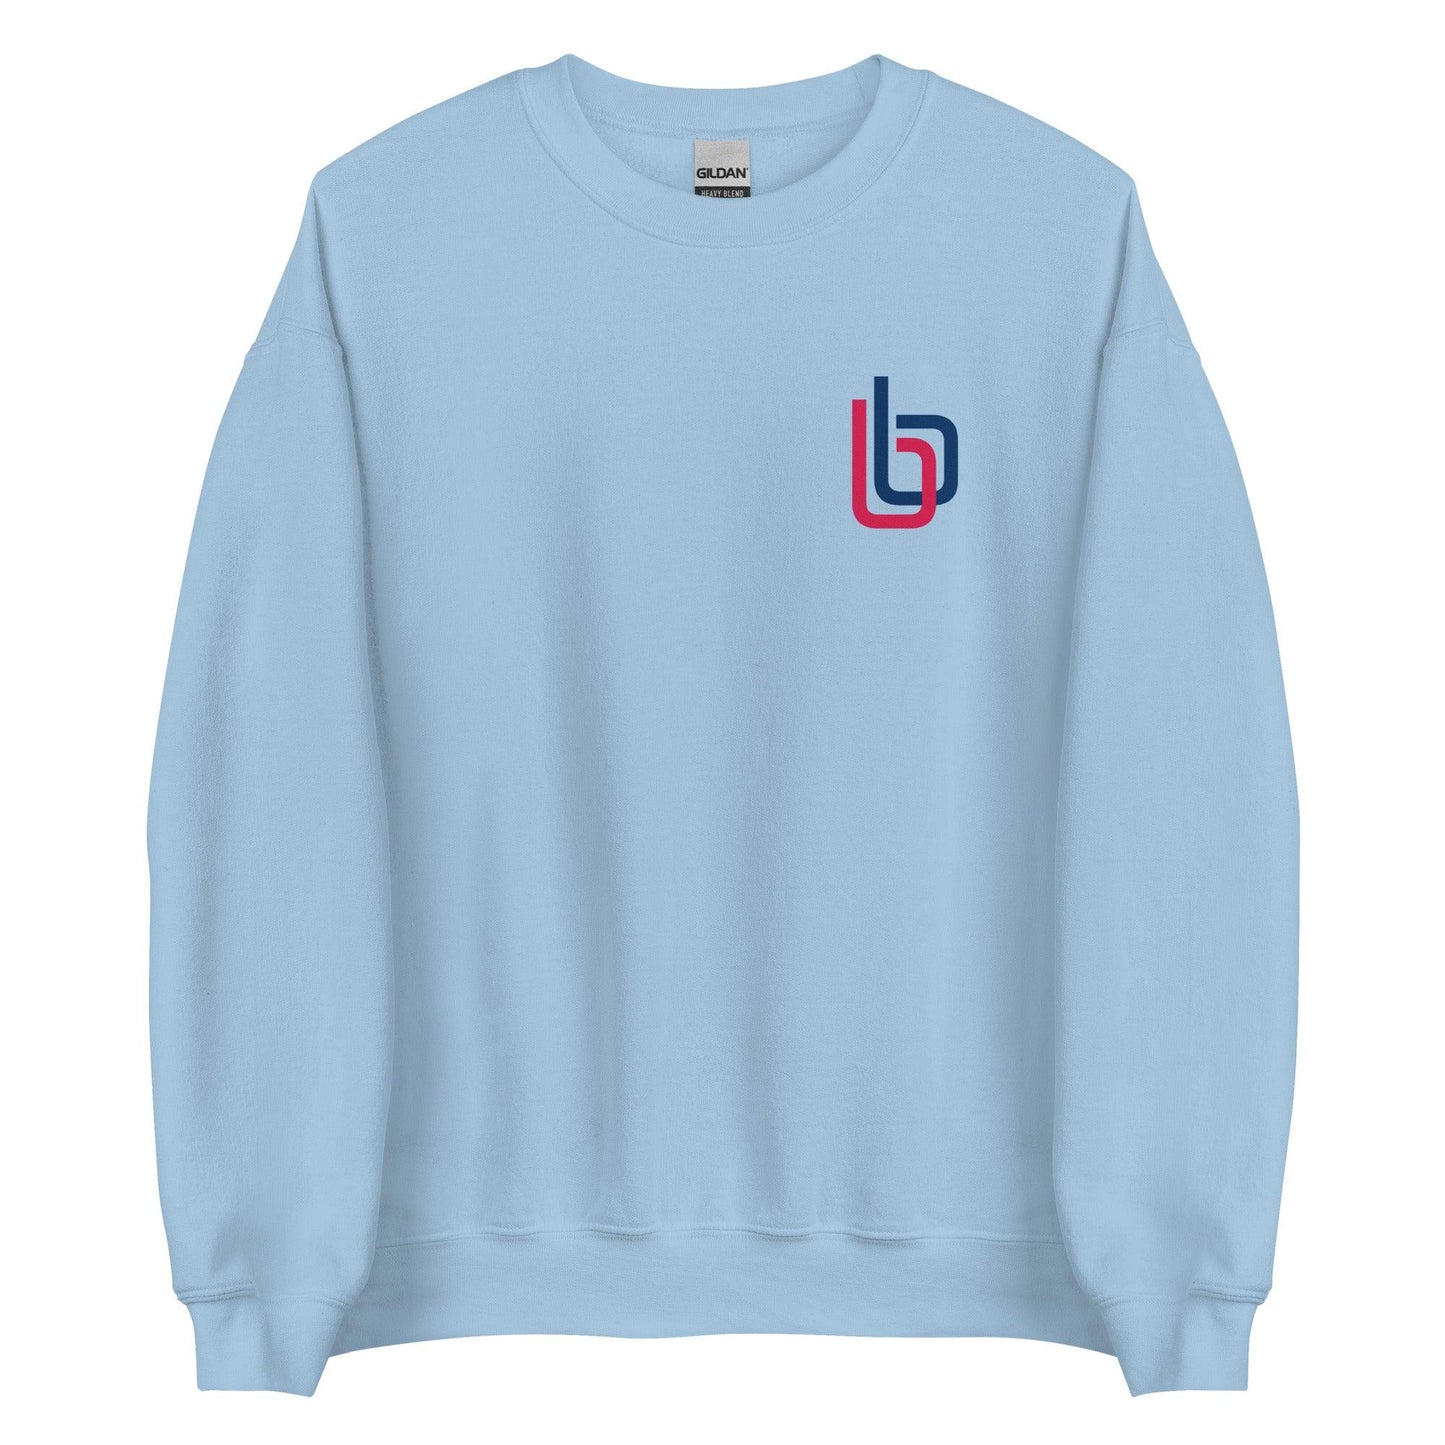 Byron Buxton “Signature” Sweatshirt - Fan Arch